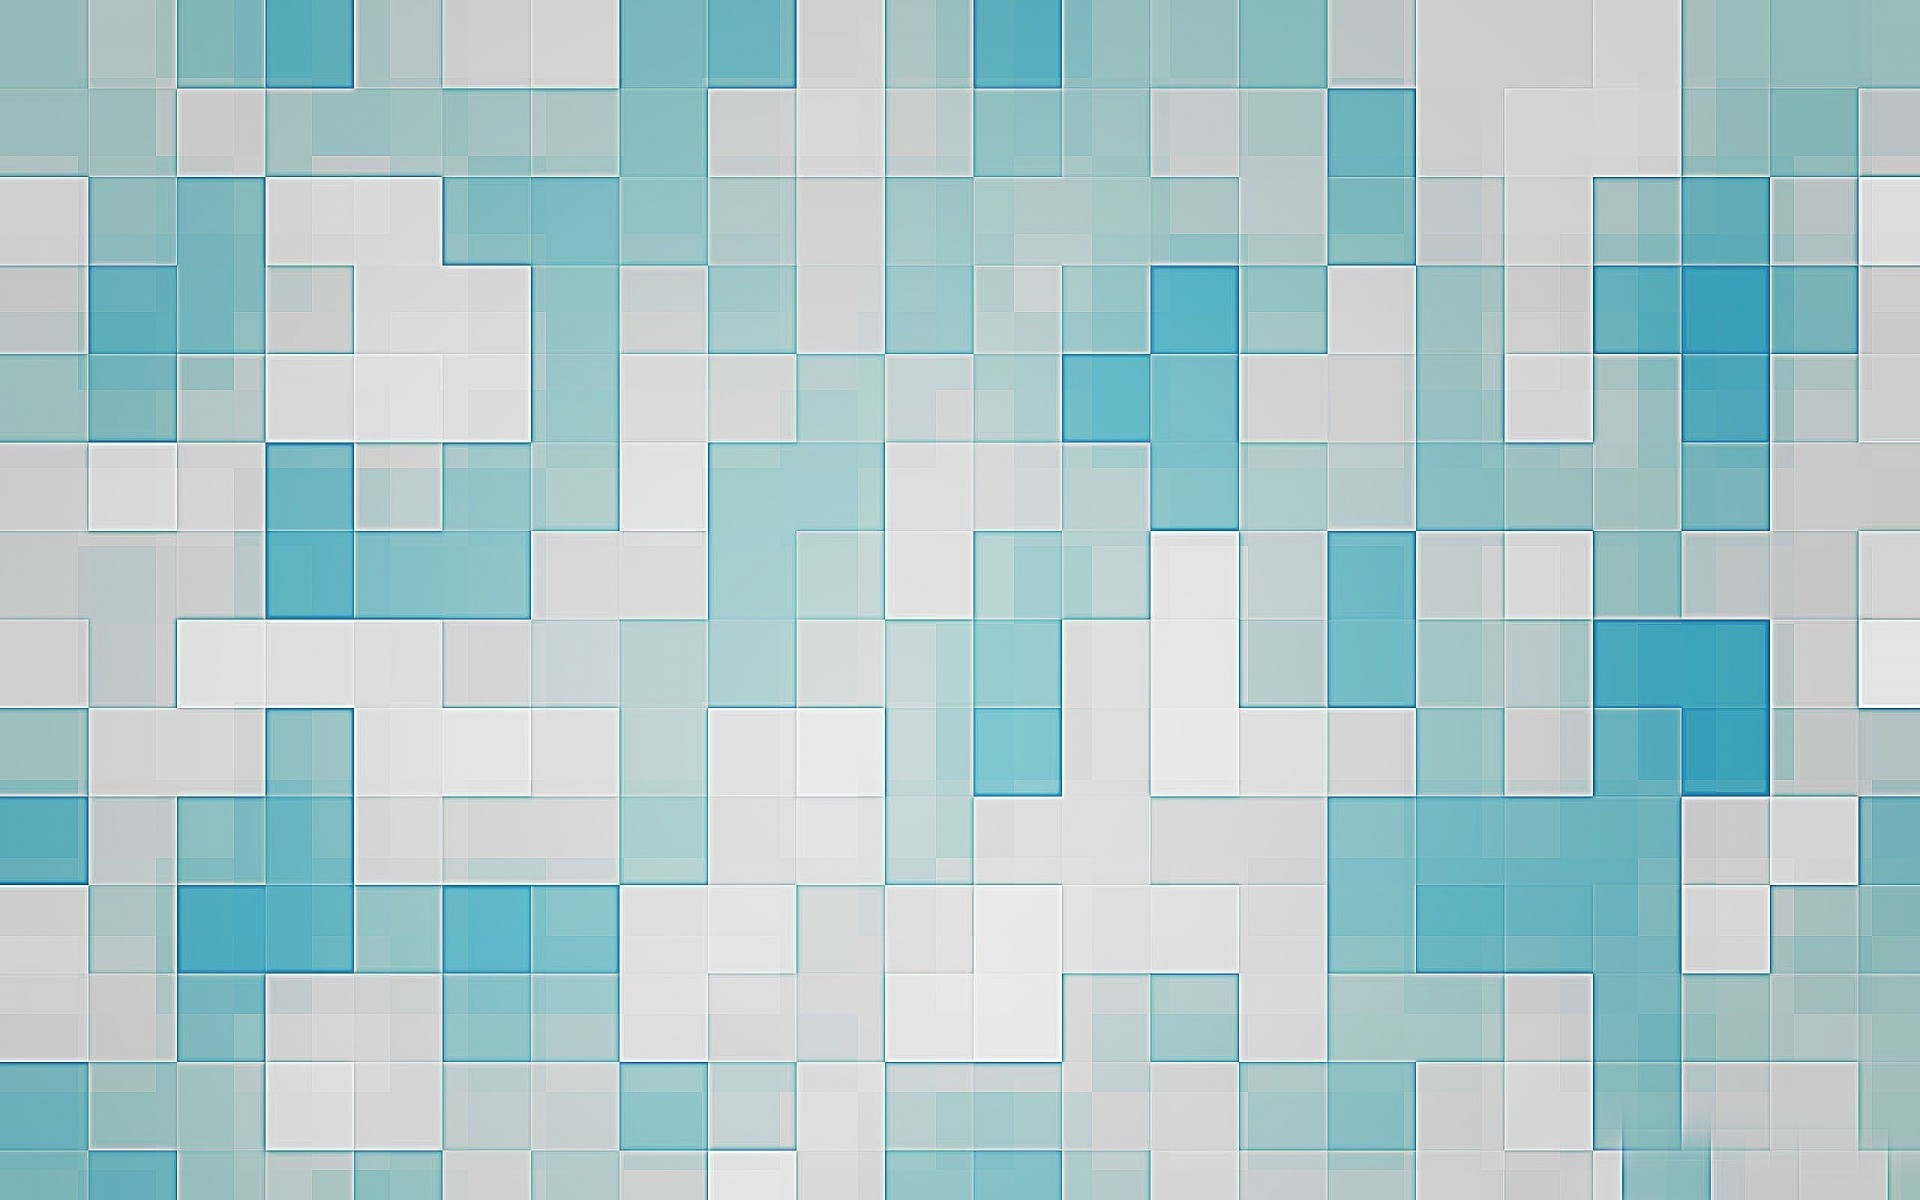 minimalism square geometric mosaic pattern wallpaper tile design retro seamless abstract texture fabric repetition background paper textile desktop illustration art